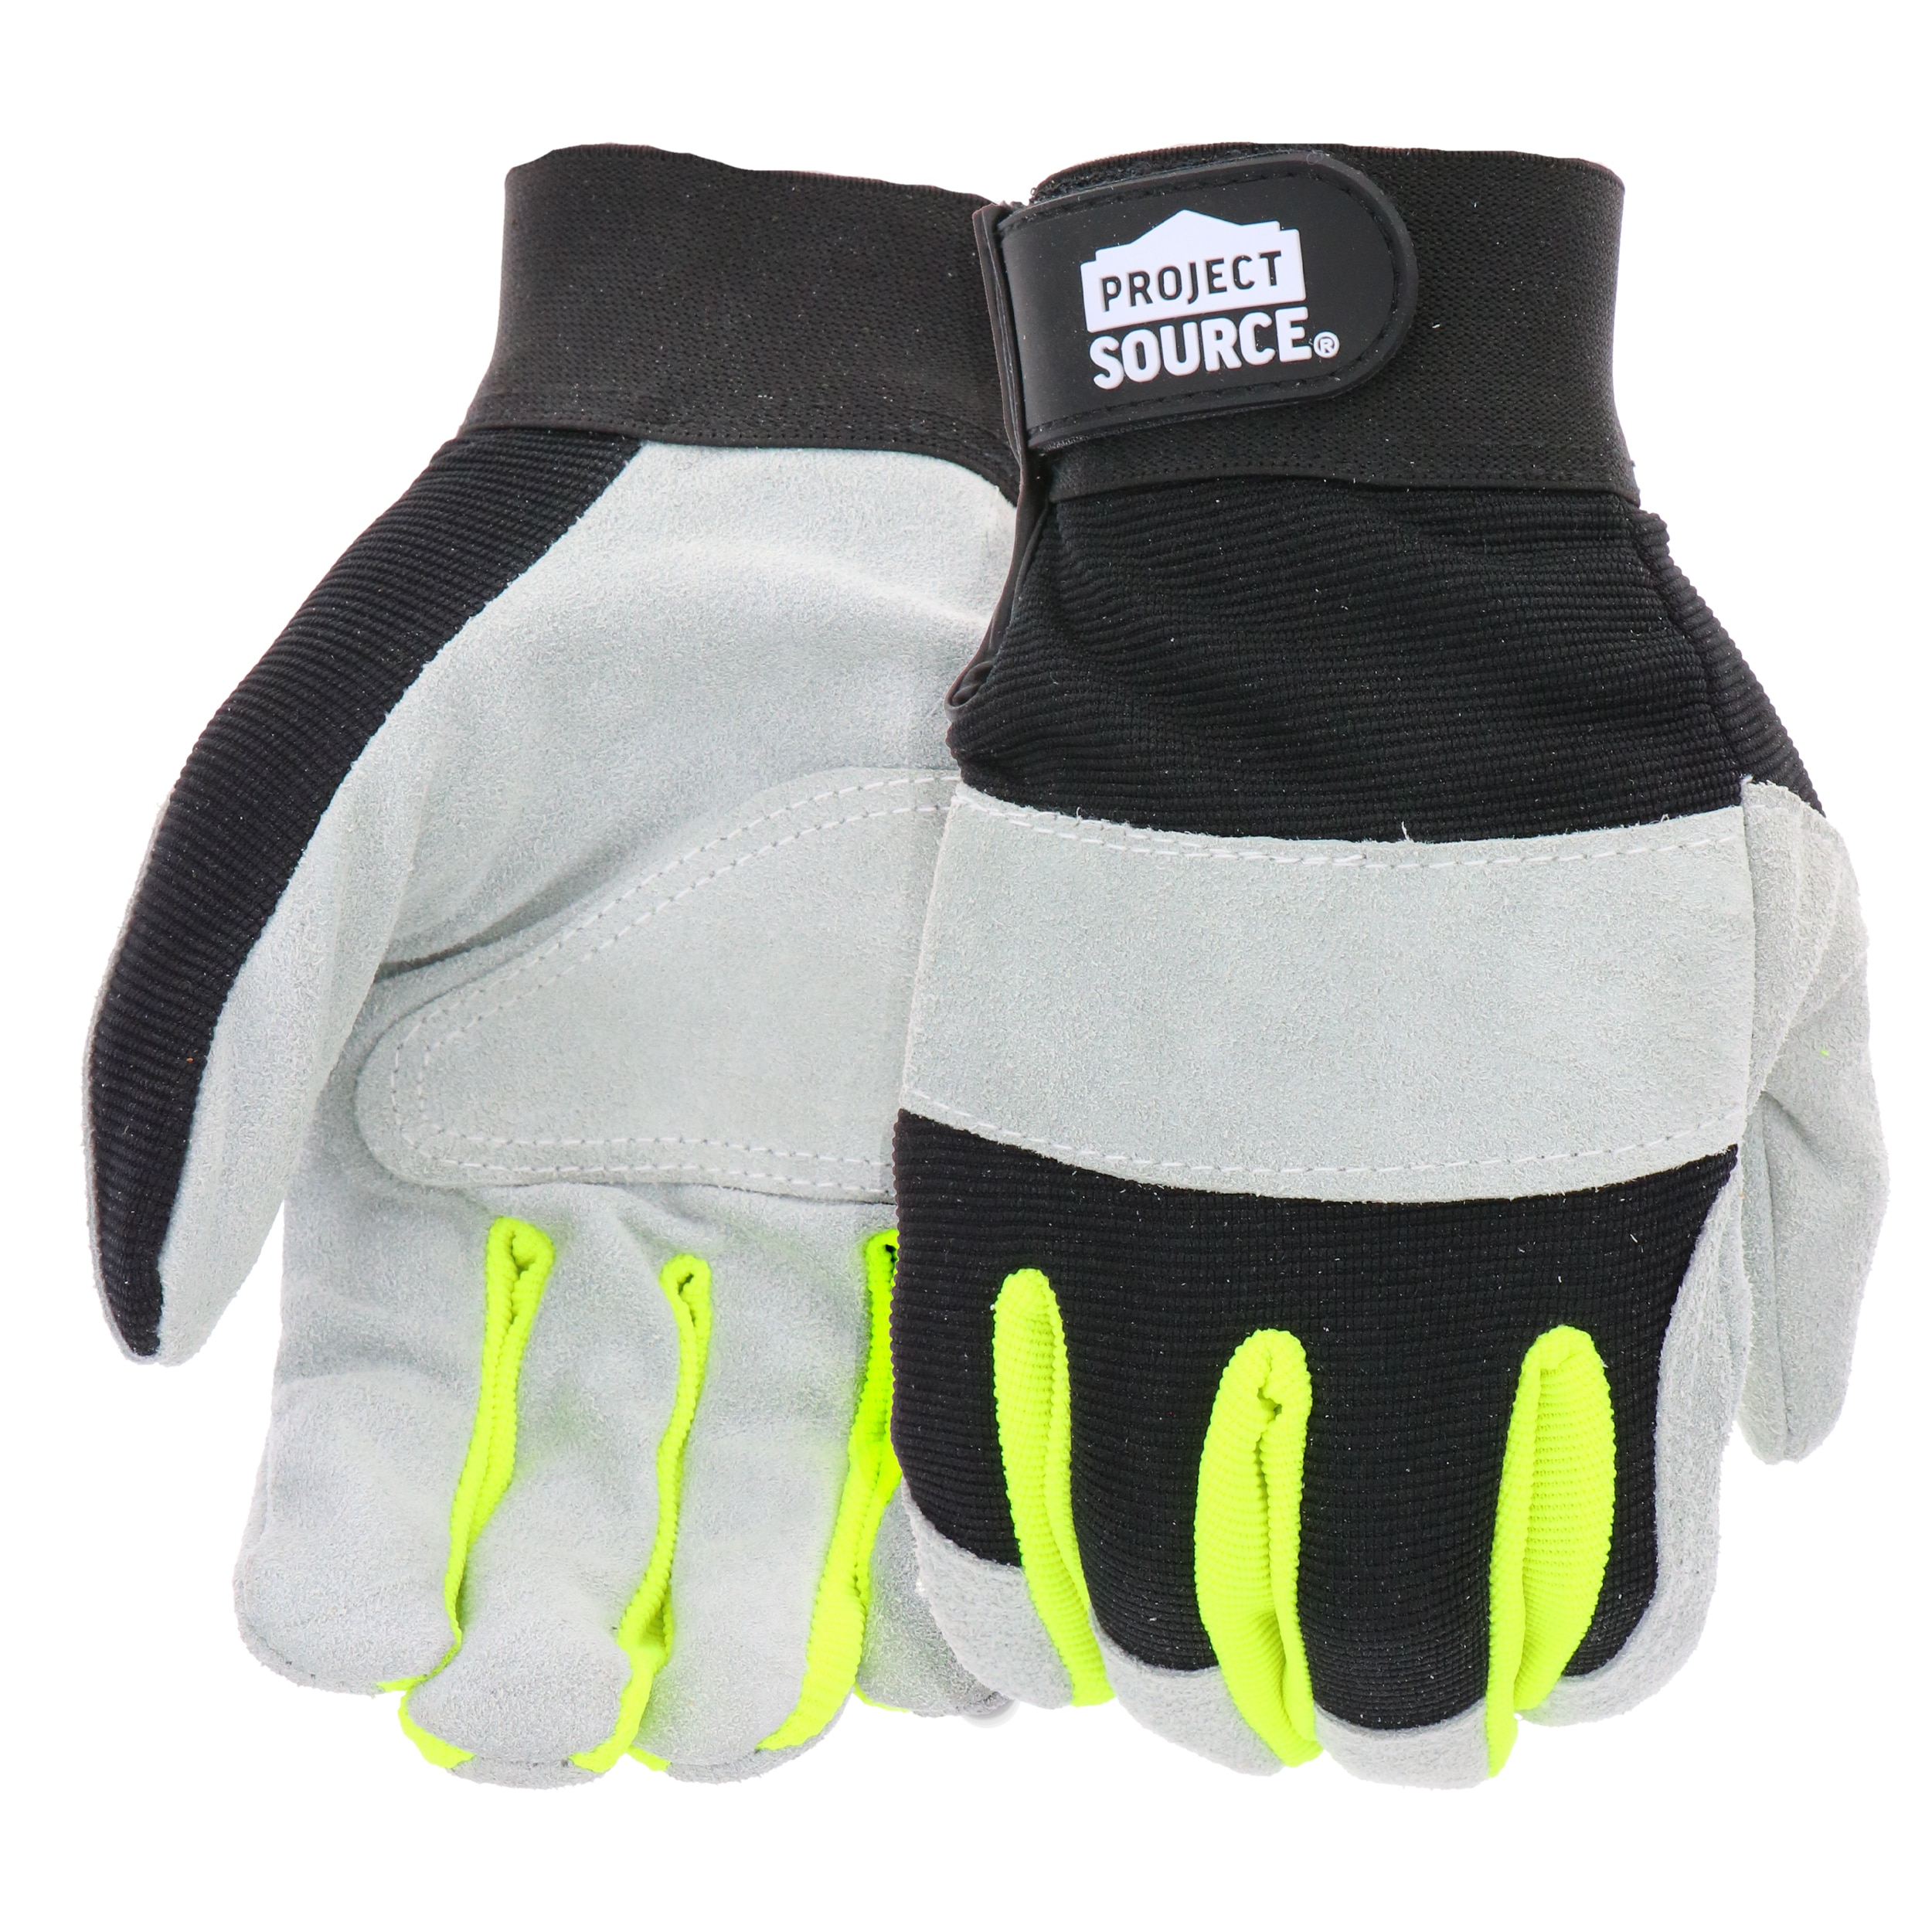 Premium Water Resistant Coated Safety Gloves Builders Gardening Work XL Size 10 